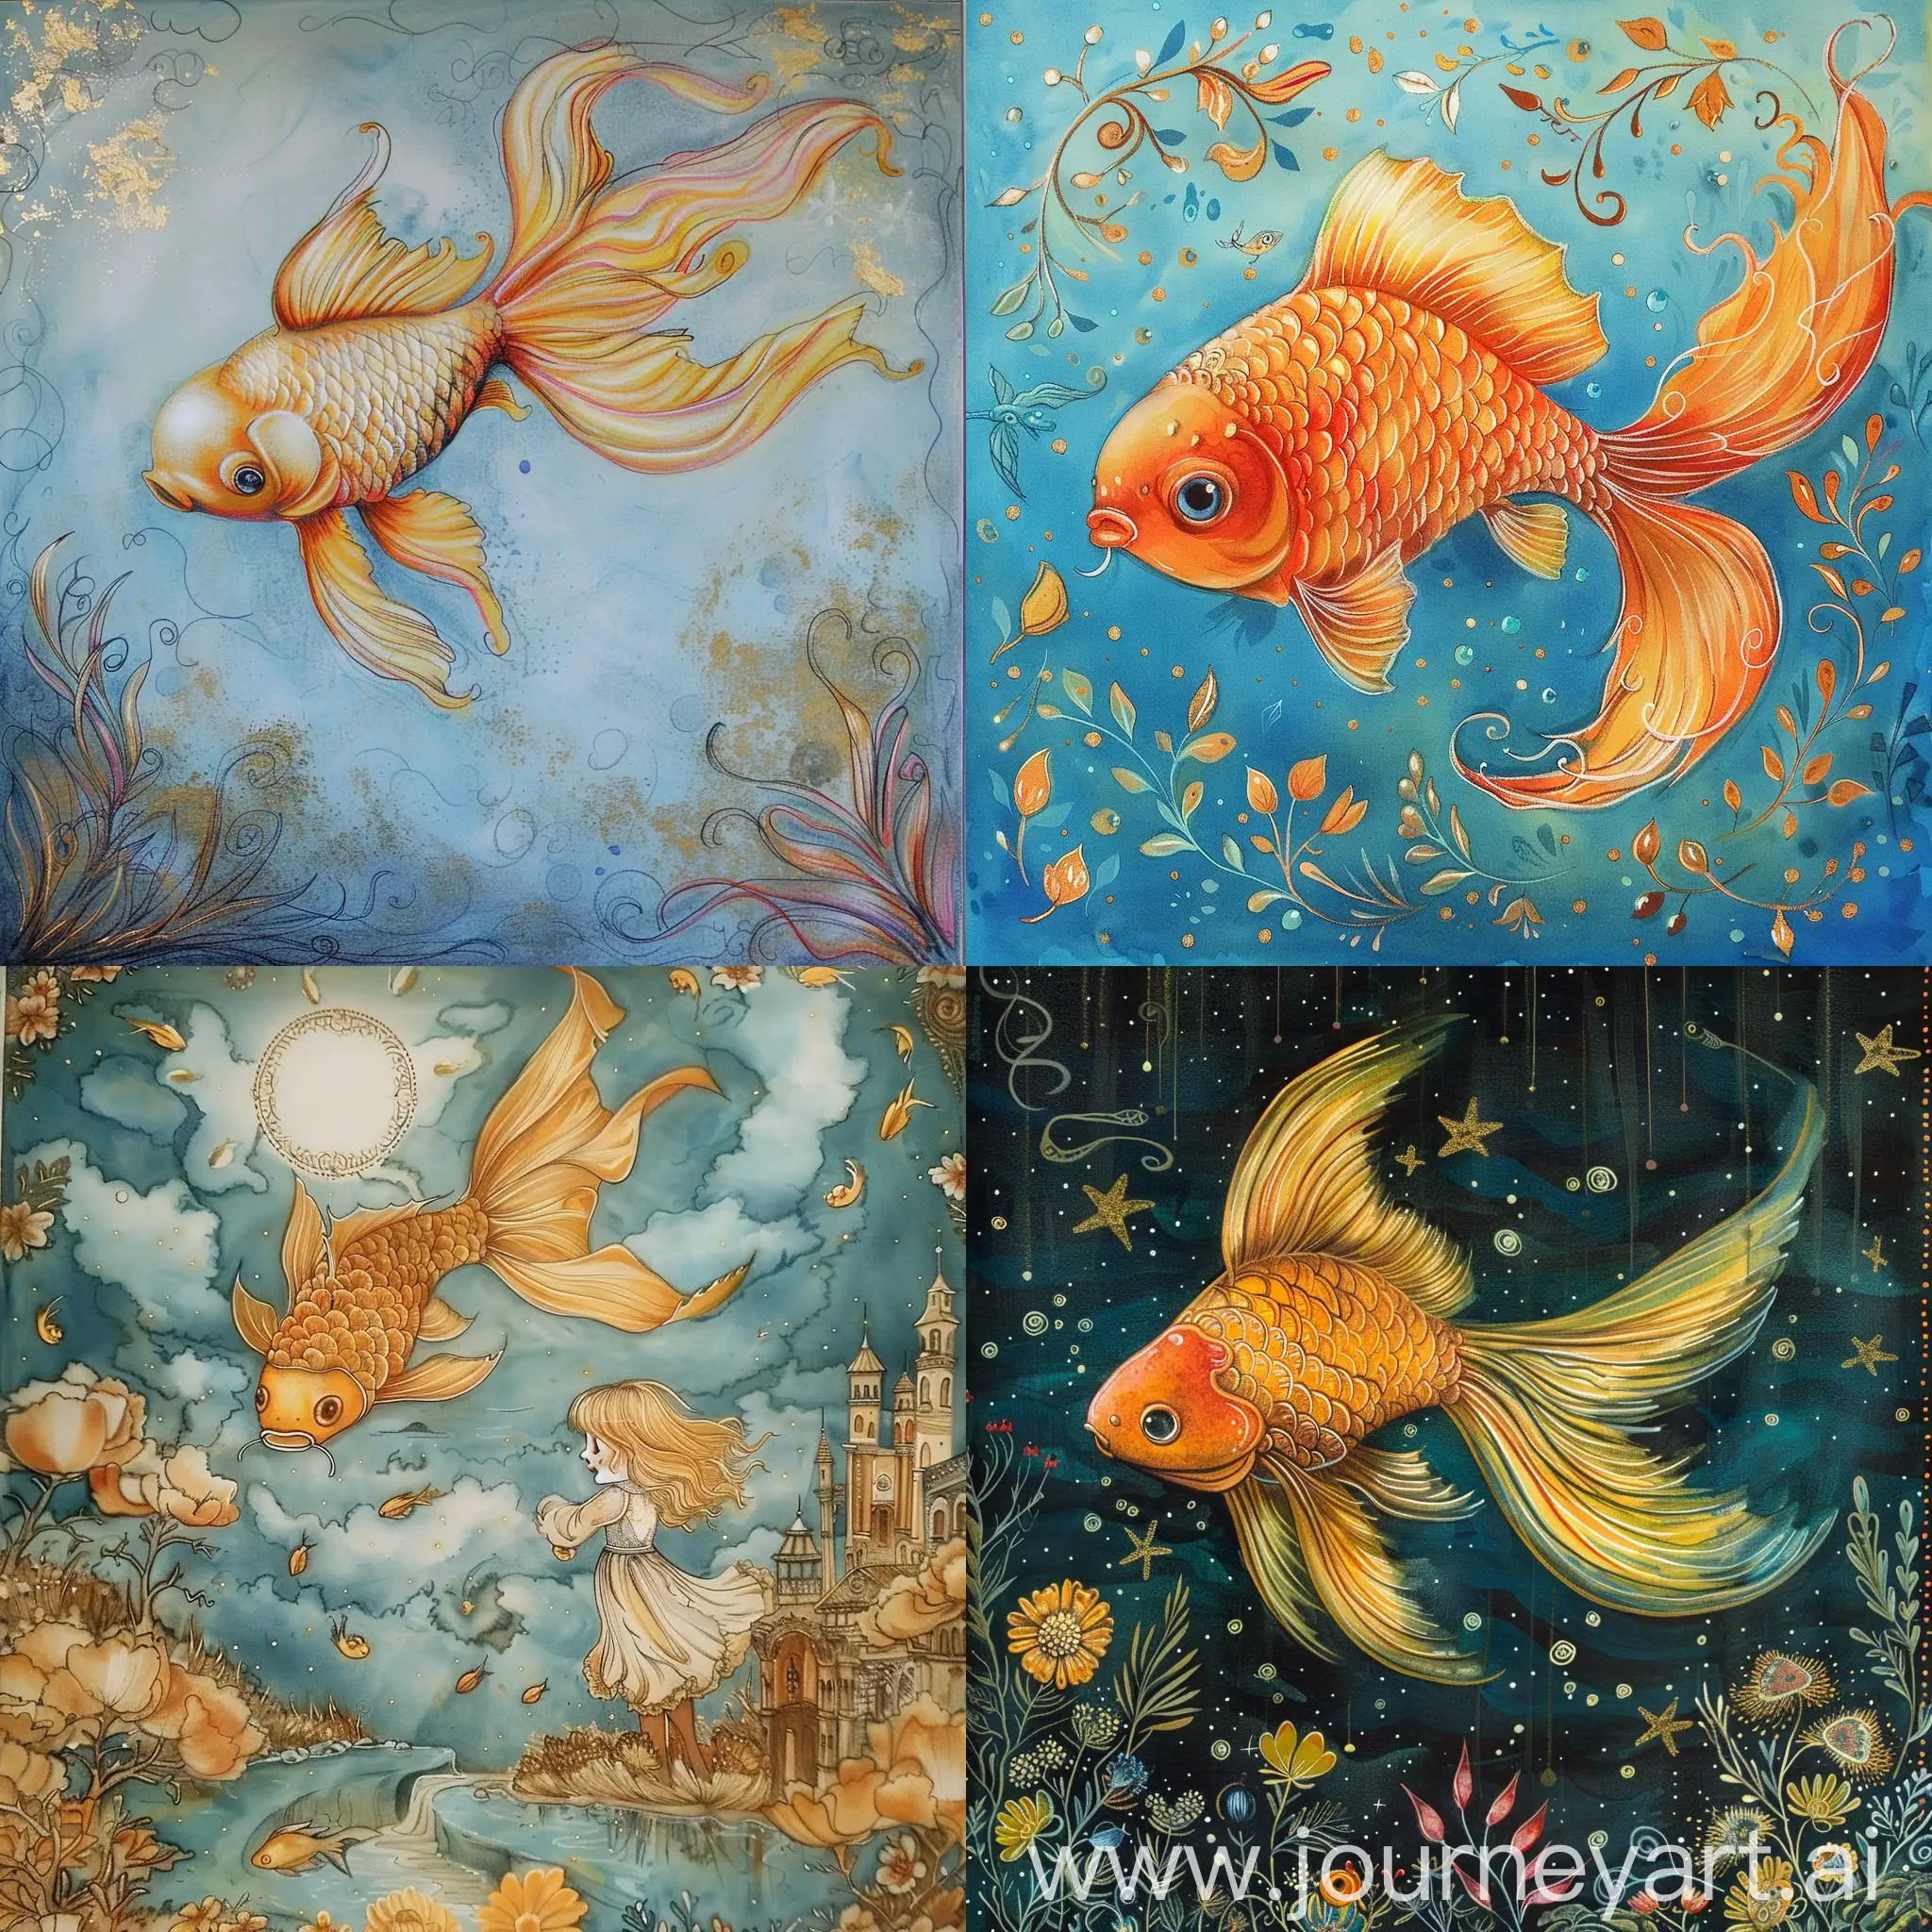 Enchanting-Fairytale-Nursery-Room-with-Golden-Fish